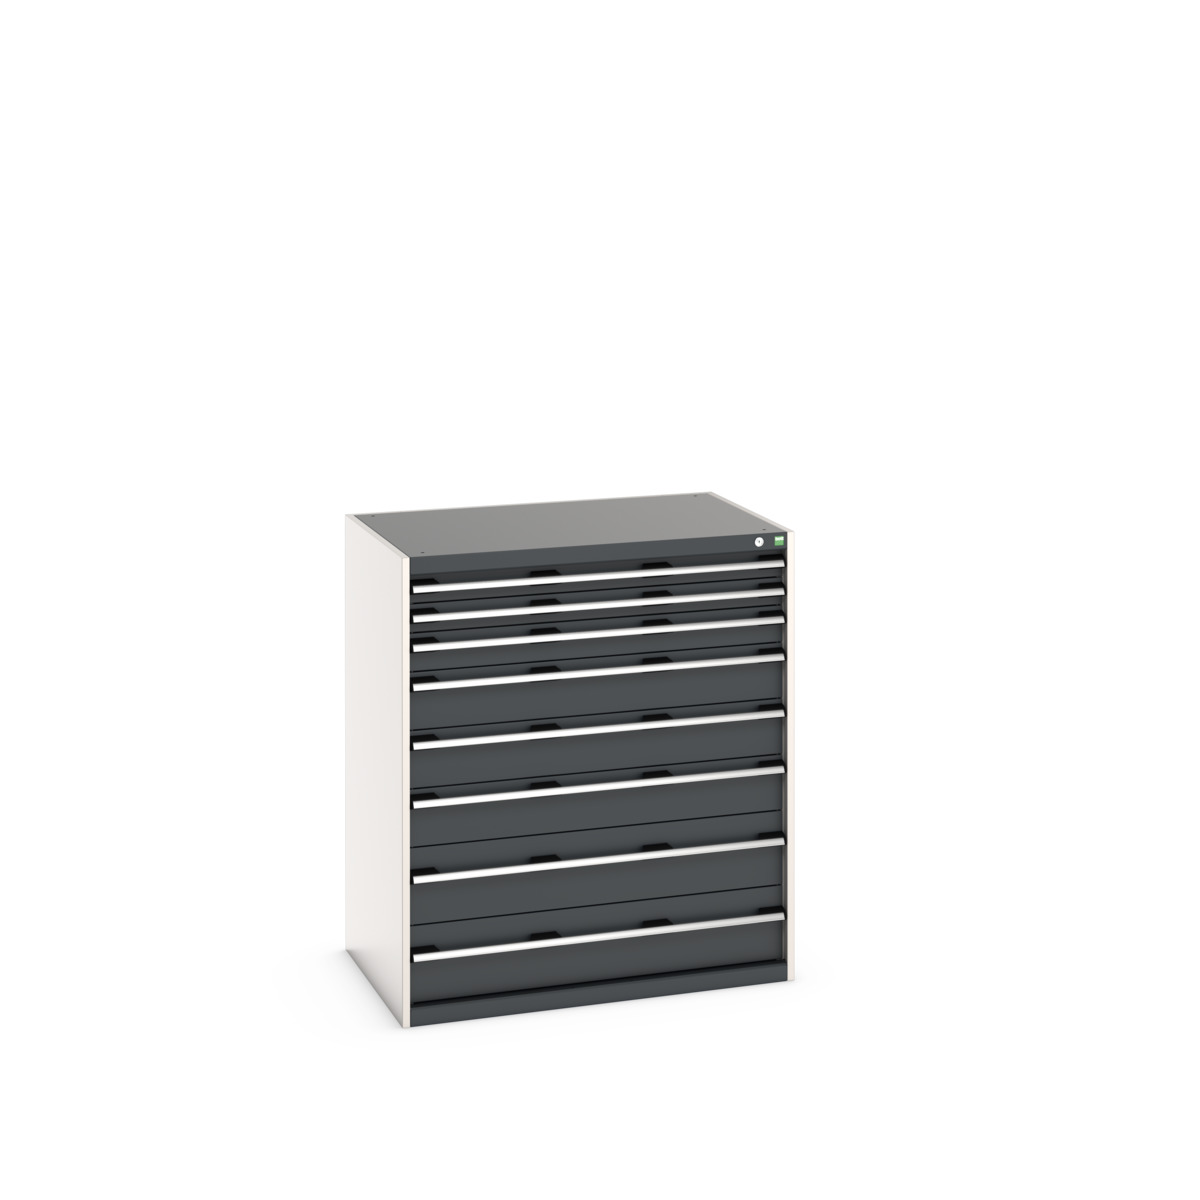 40029032. - cubio drawer cabinet